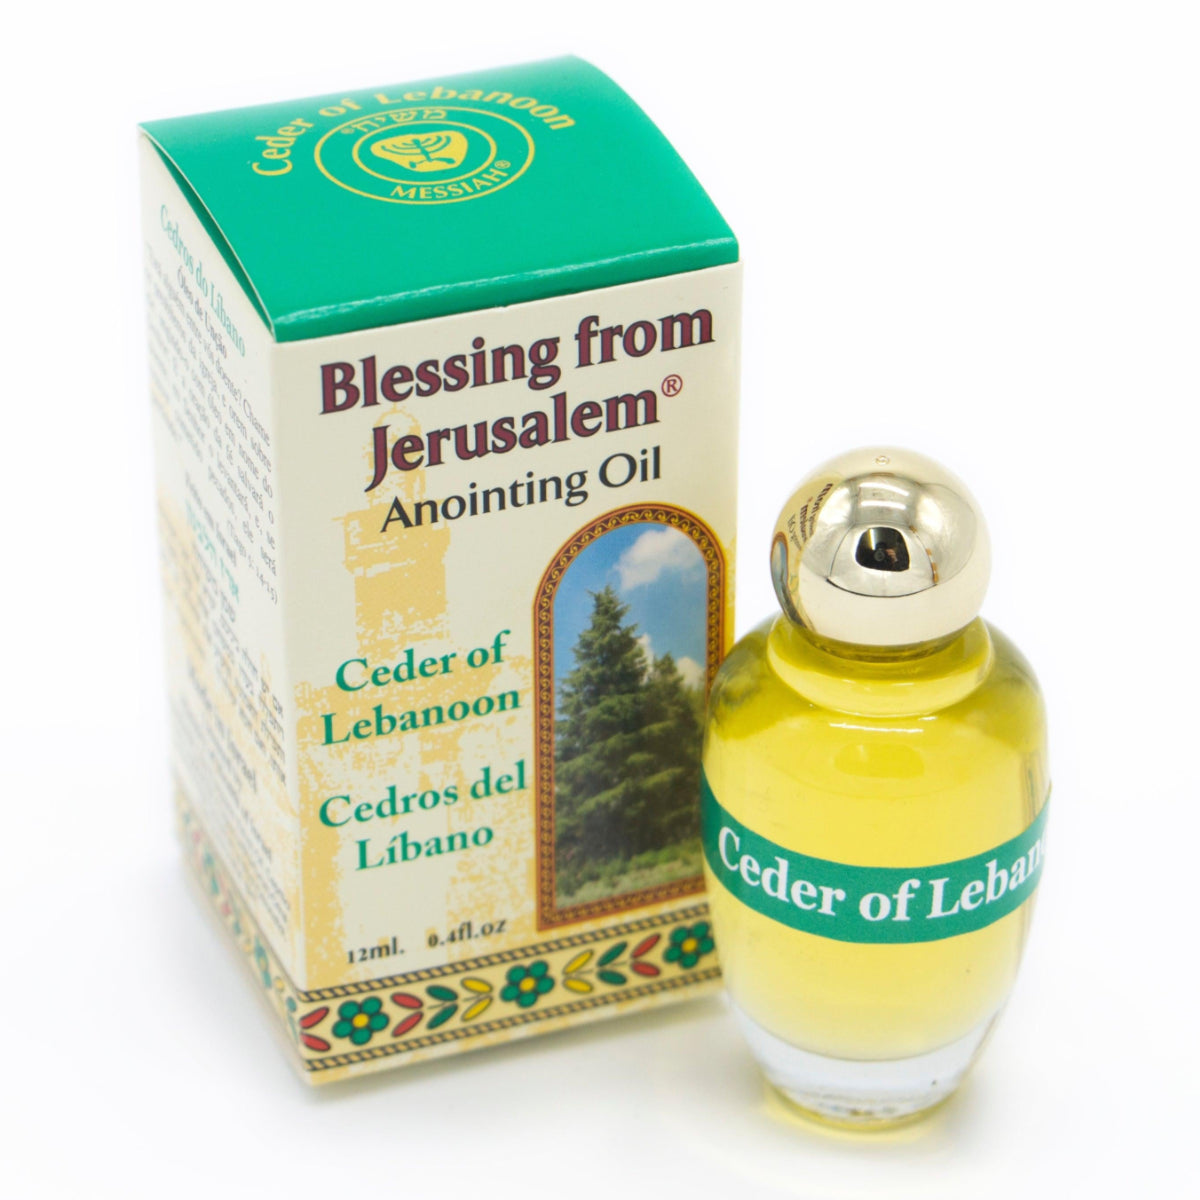 Cedar of Lebanon Anointing Oil - From Holyland Jerusalem 12 ml. - 0.4 oz